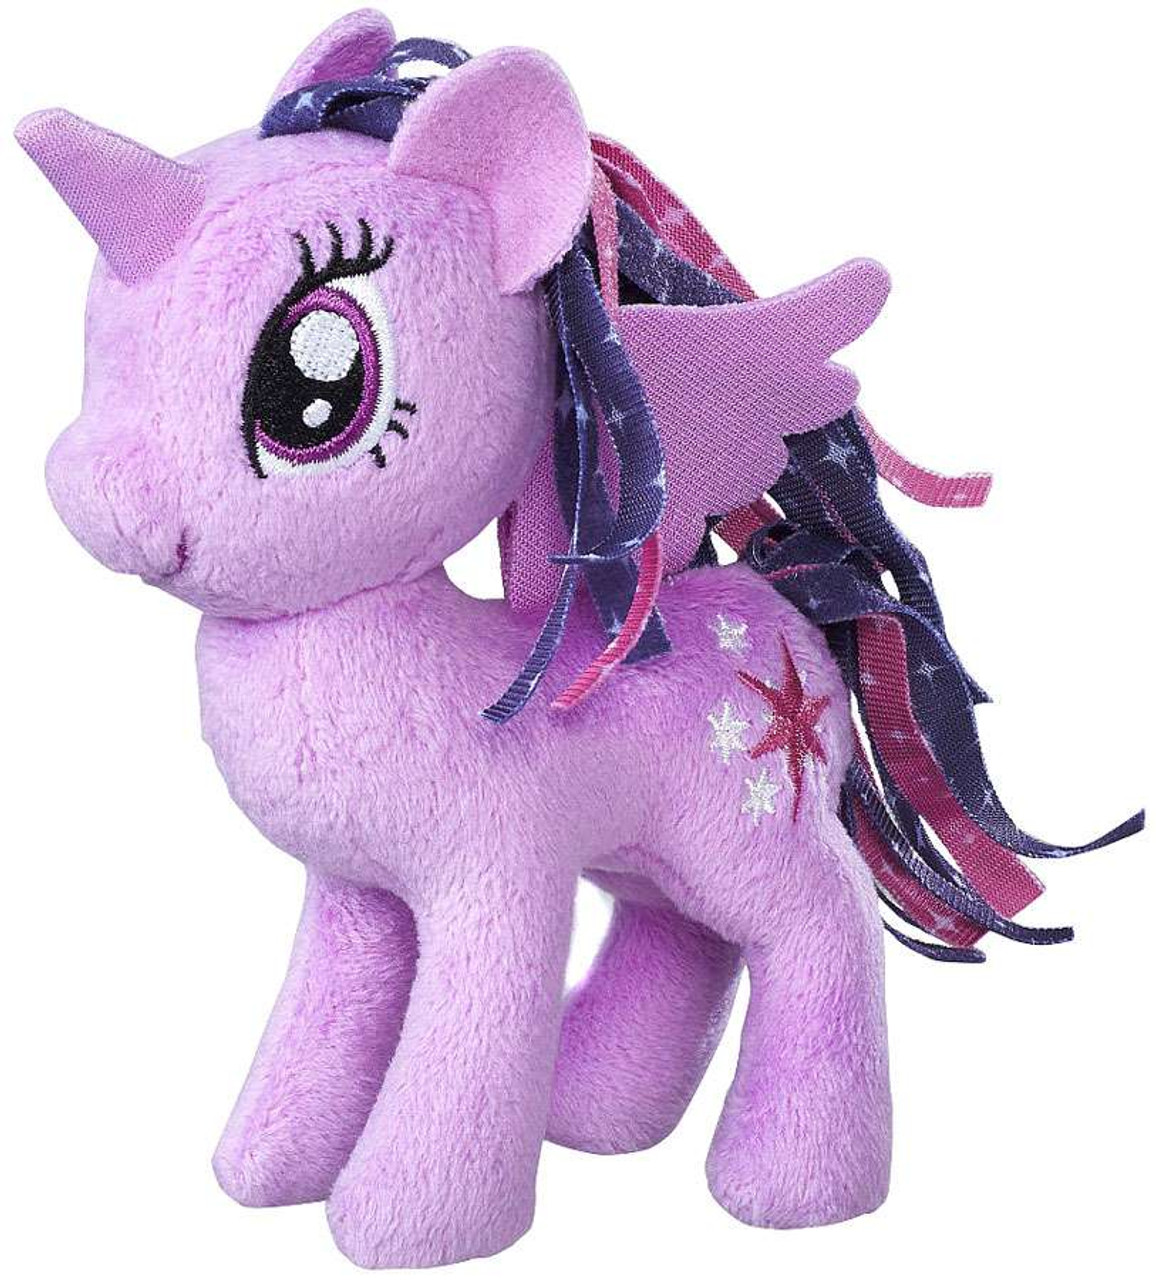 princess twilight sparkle toy